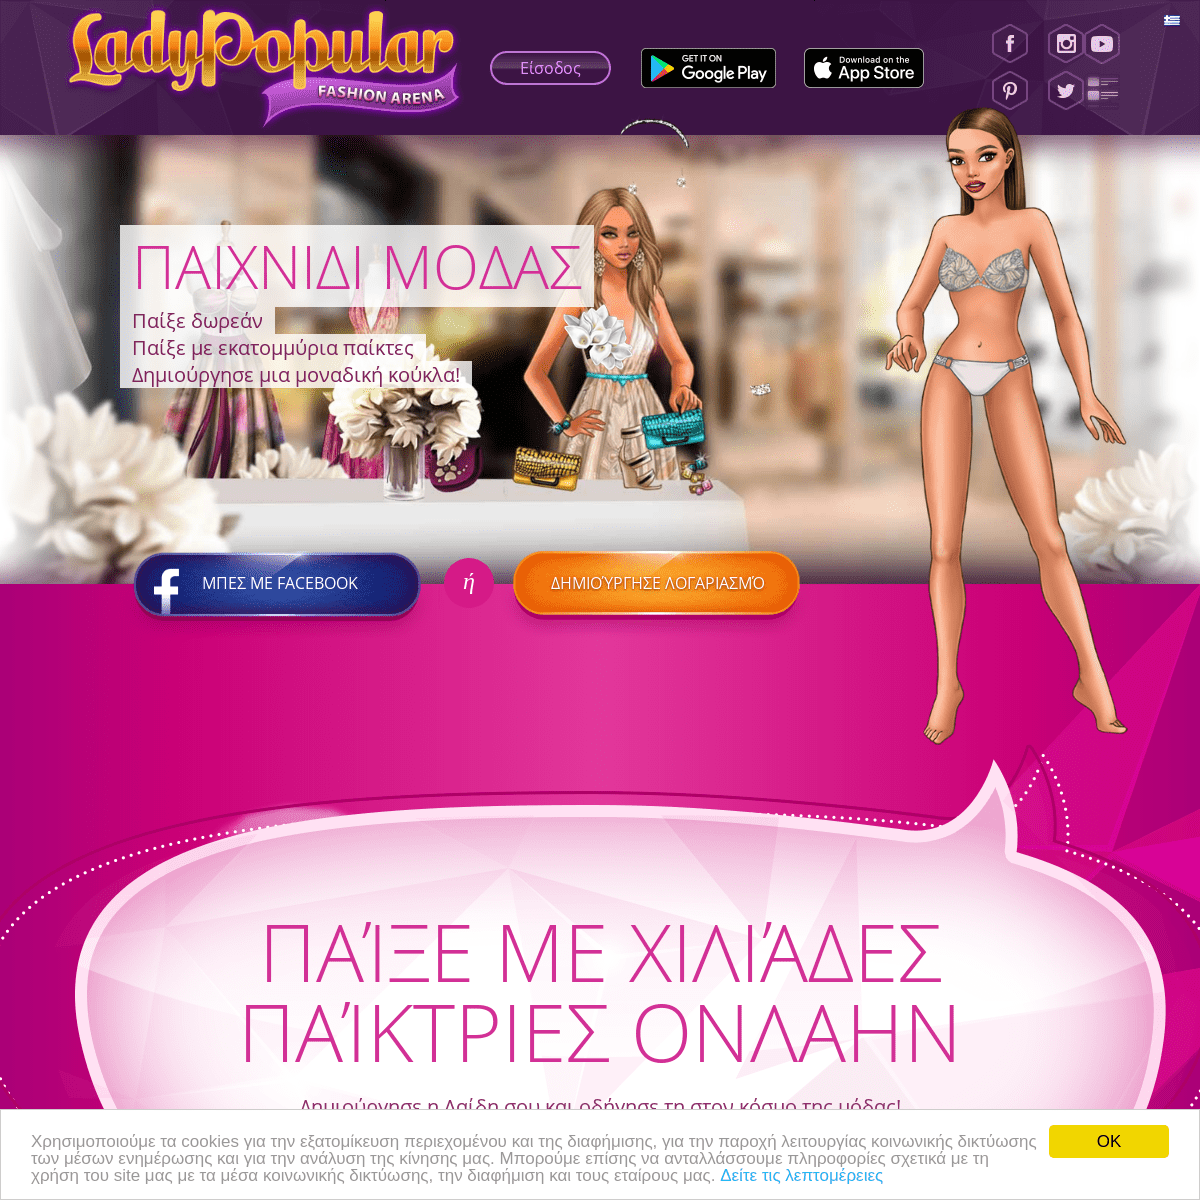 LADY POPULAR | Το καλύτερο Online Dress Up παιχνίδι Μόδας!